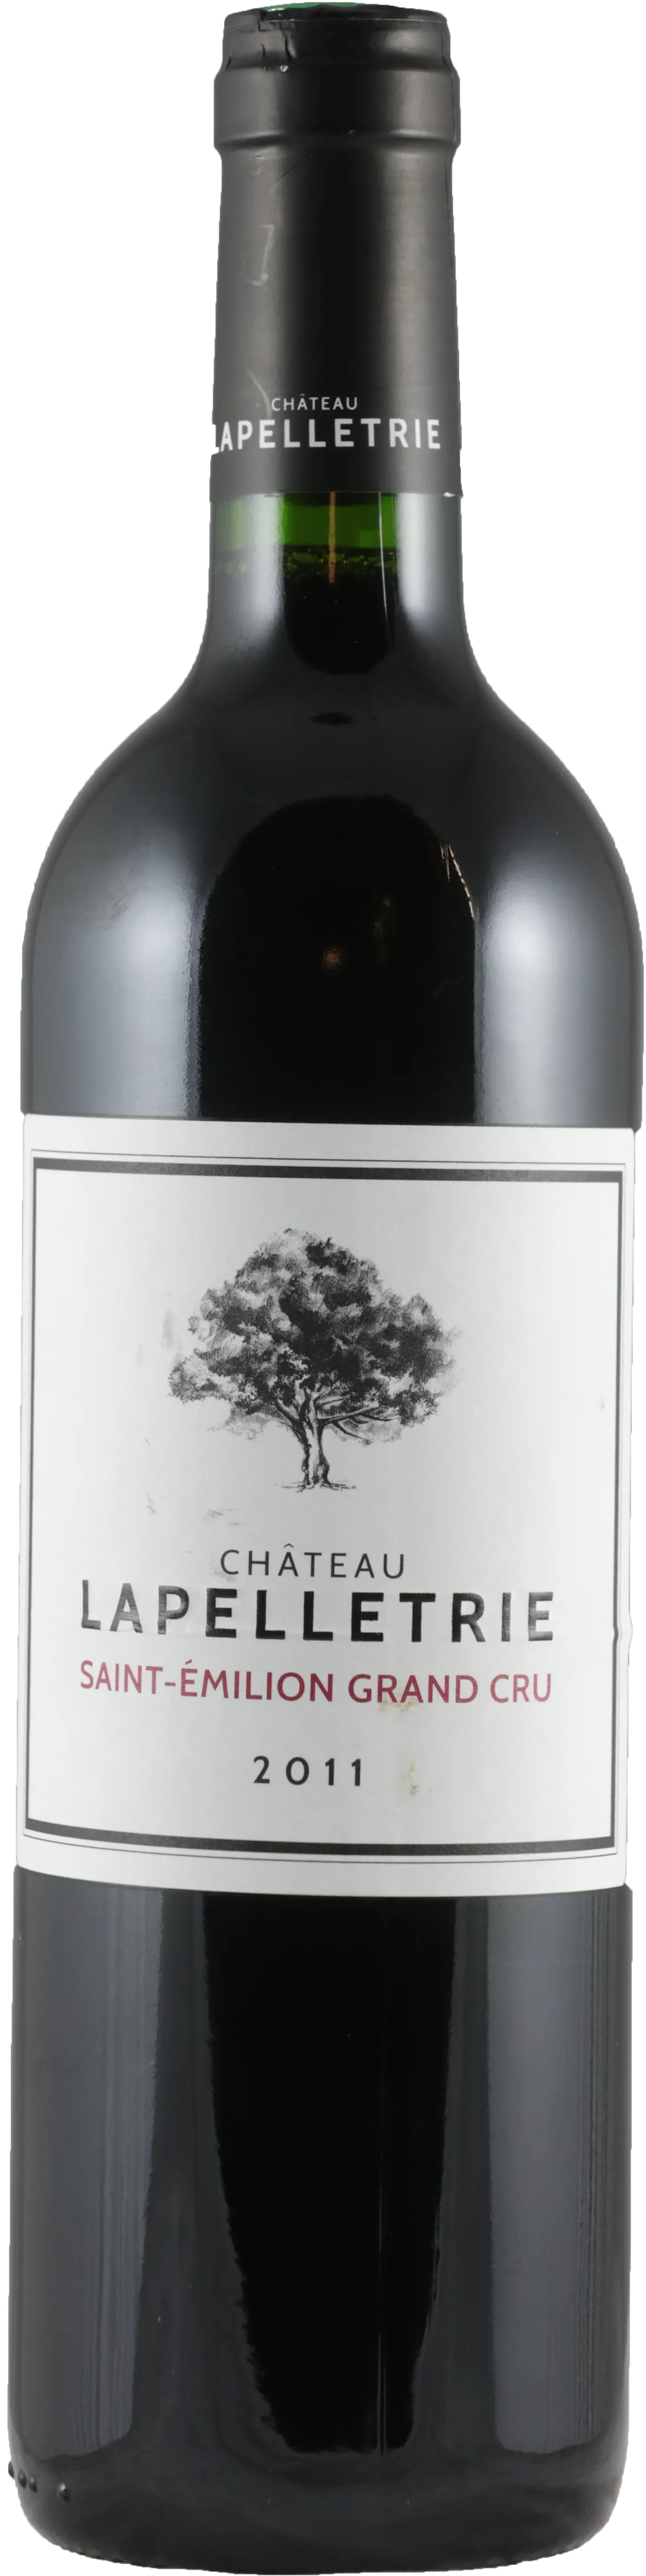 Bottle of Château Lapelletrie Saint-Émilion Grand Cru from search results